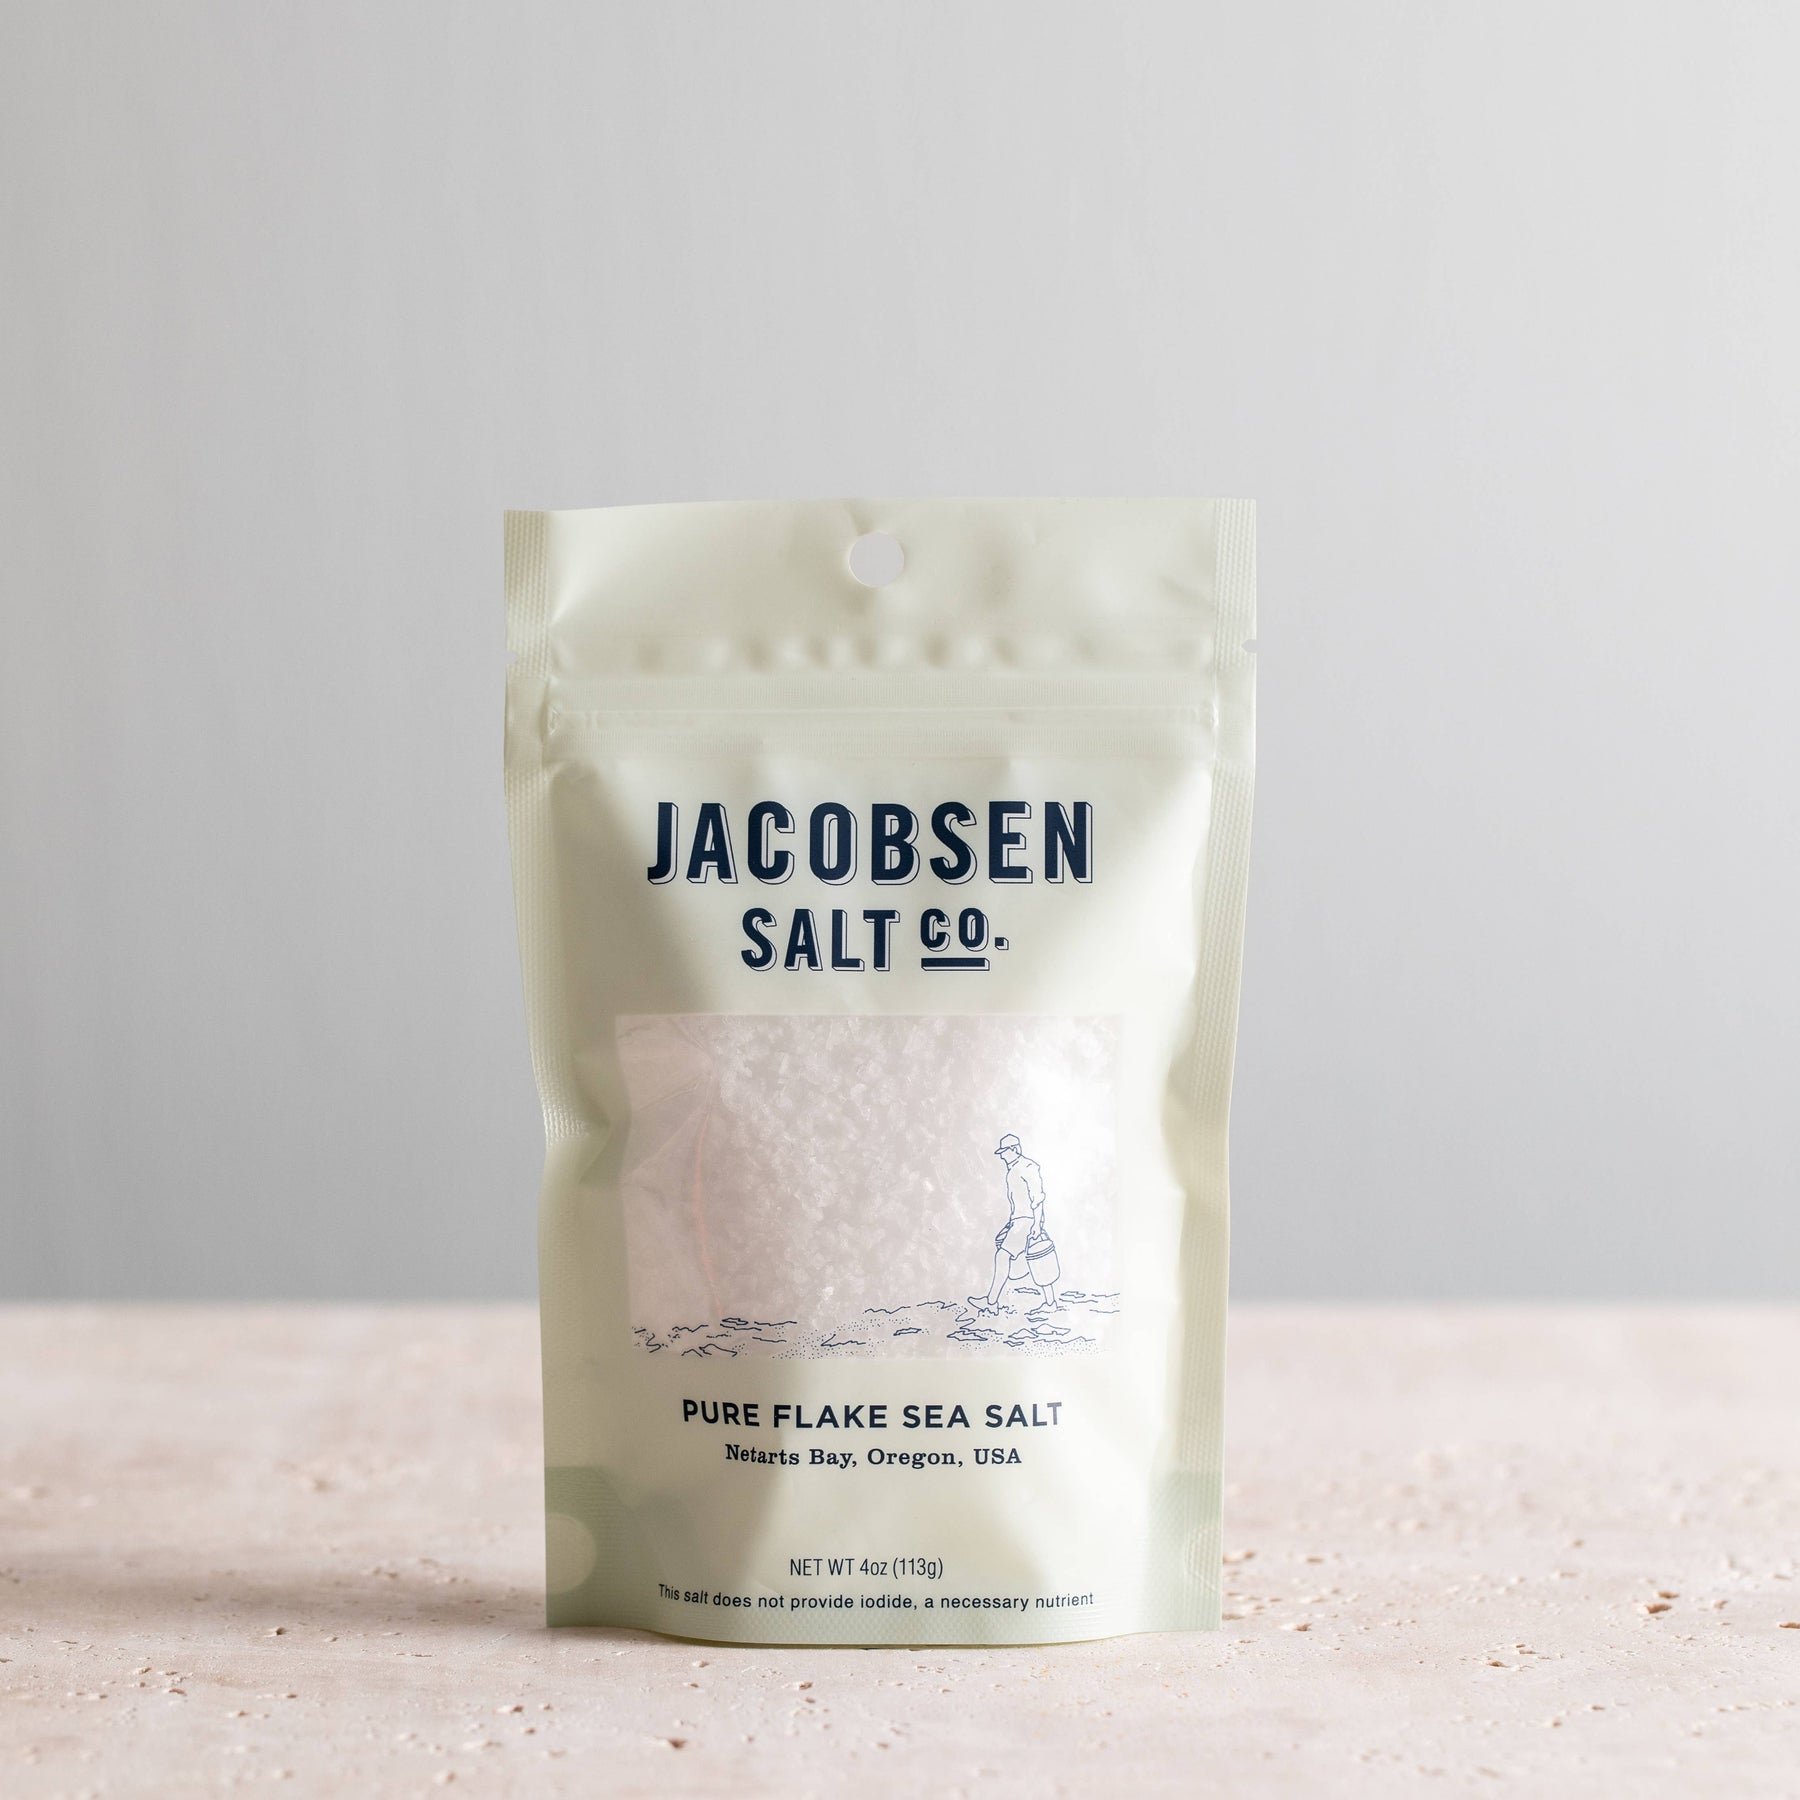 Jacobsen Salt Co - Infused Habanero Salt